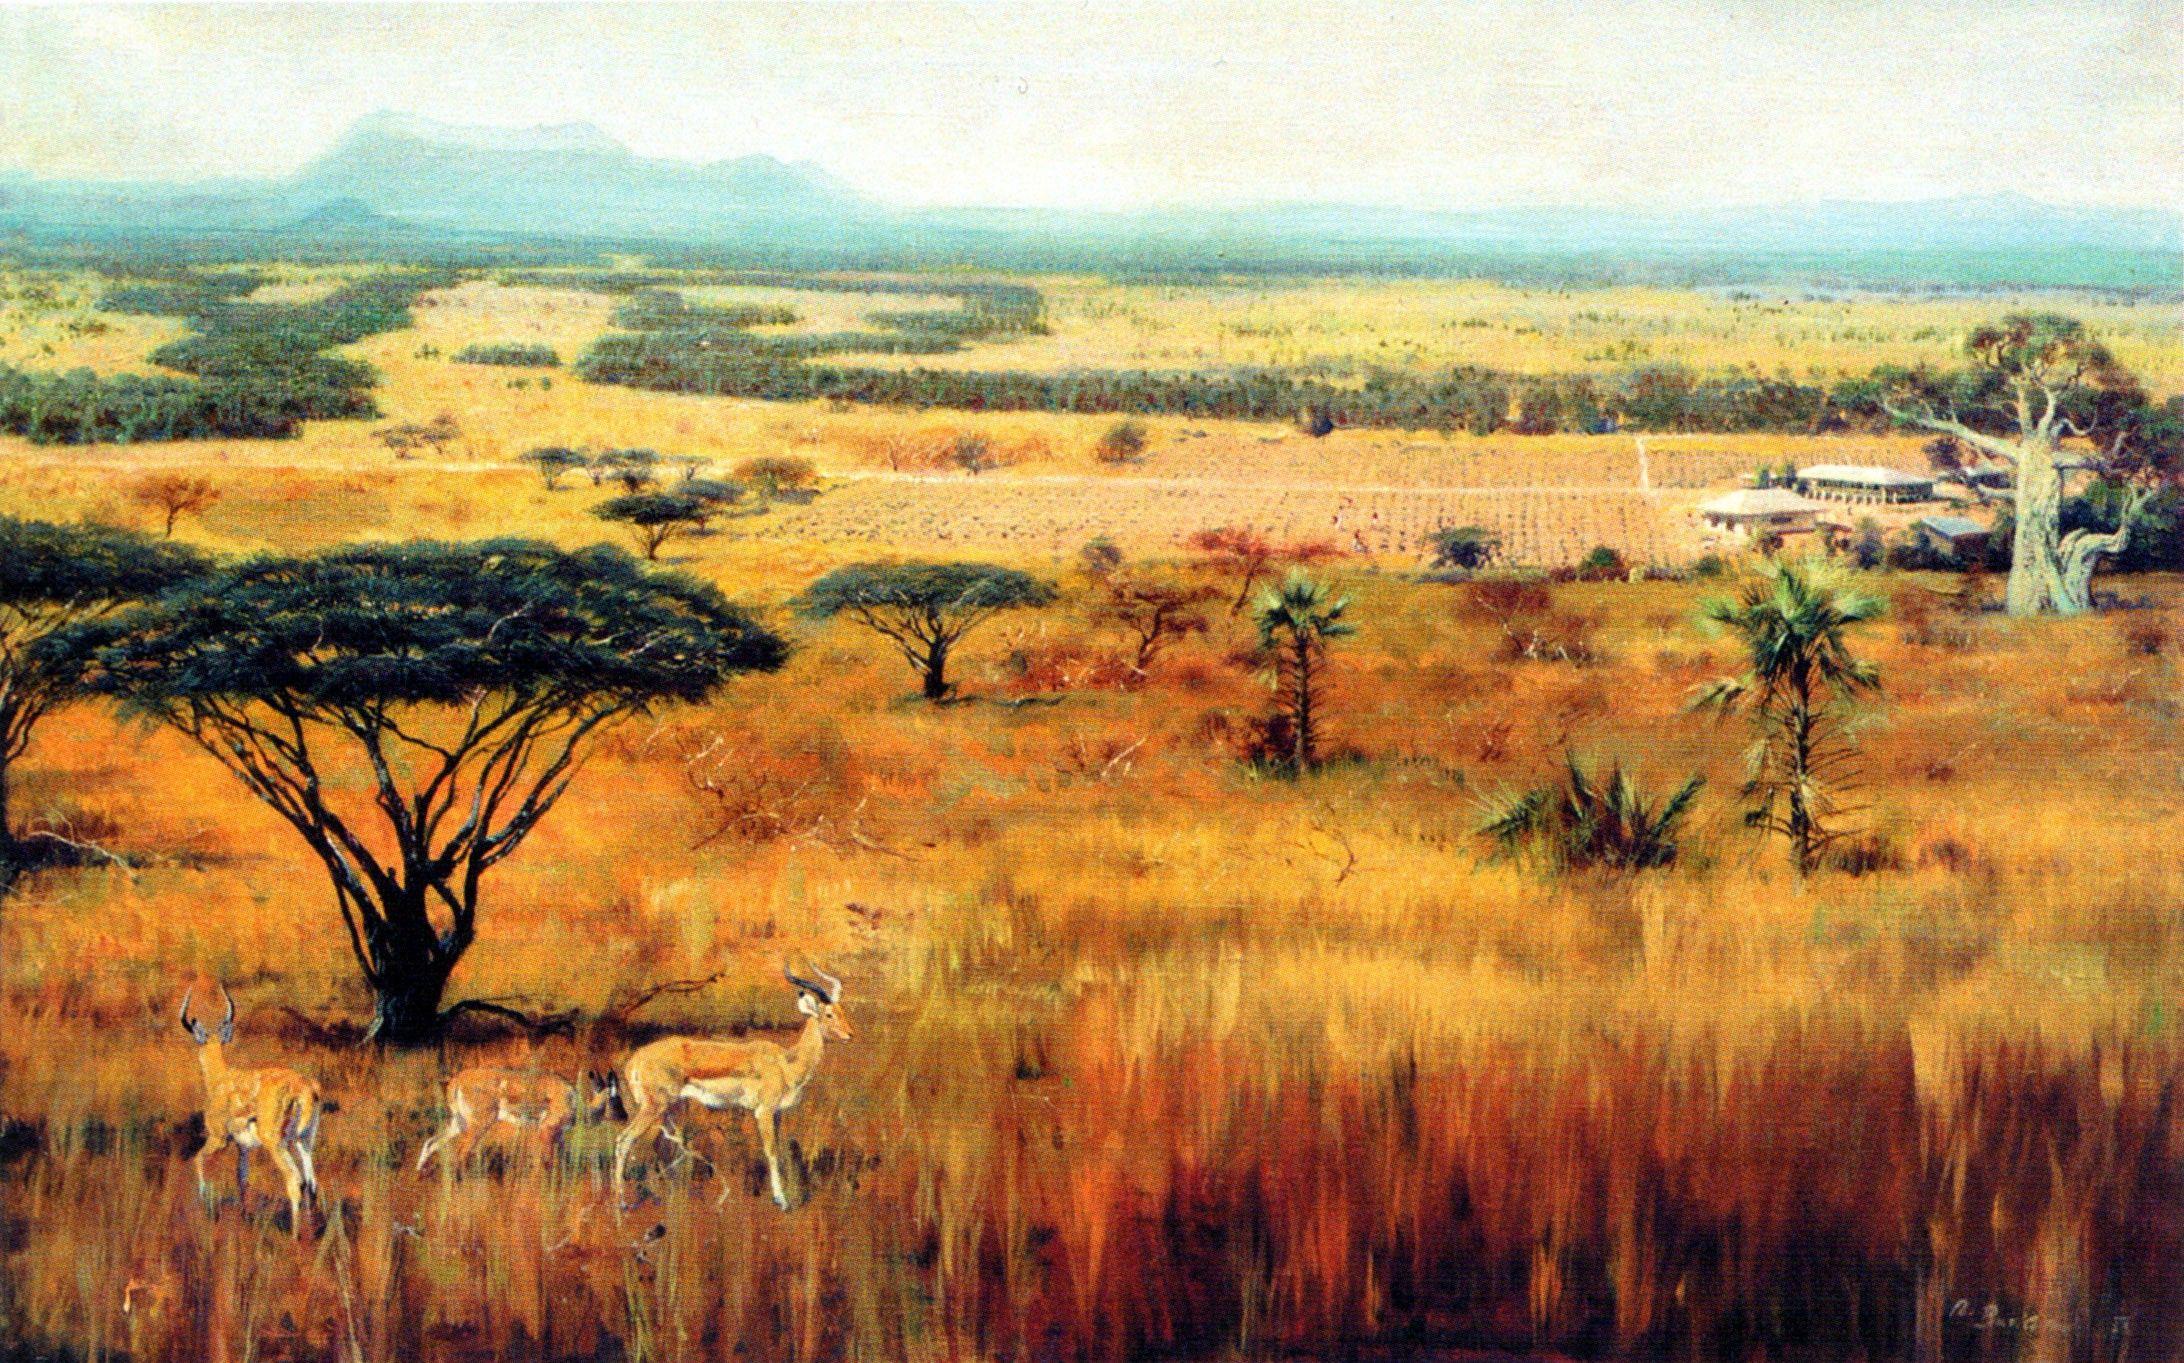 Other: Savanna Animal Africa Landscape Photos for HD 16:9 High